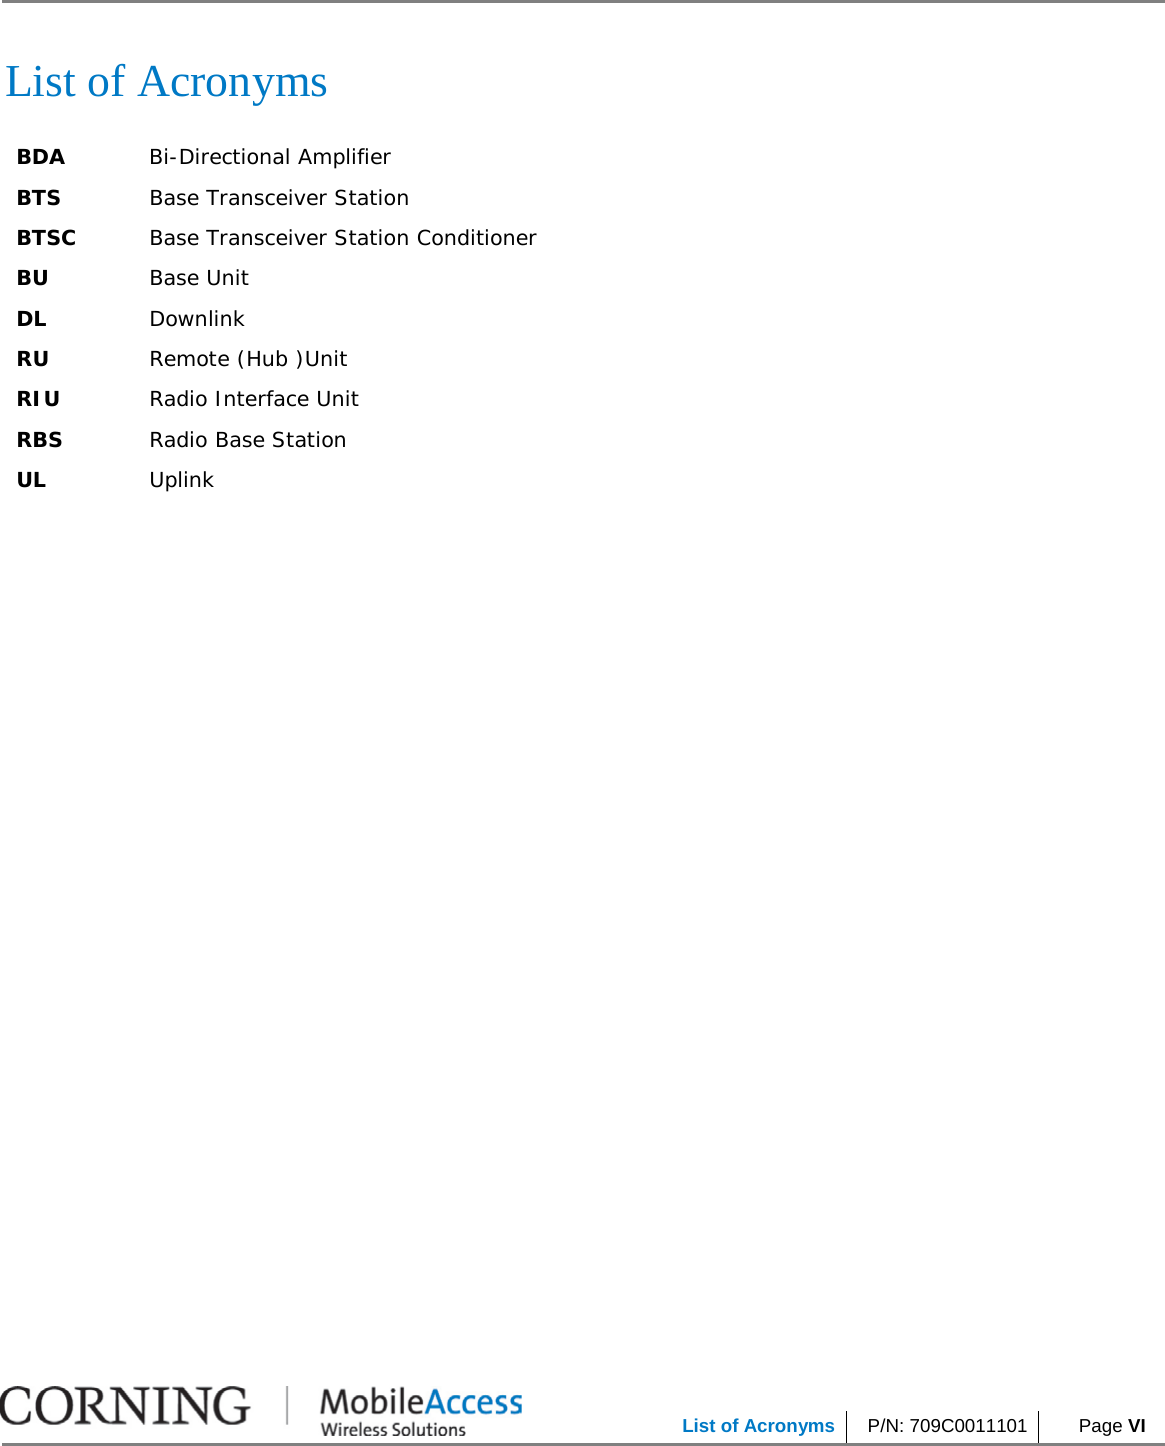            List of Acronyms P/N: 709C0011101  Page VI     List of Acronyms BDA Bi-Directional Amplifier BTS Base Transceiver Station BTSC Base Transceiver Station Conditioner BU Base Unit DL Downlink RU Remote (Hub )Unit RIU Radio Interface Unit RBS Radio Base Station UL Uplink 